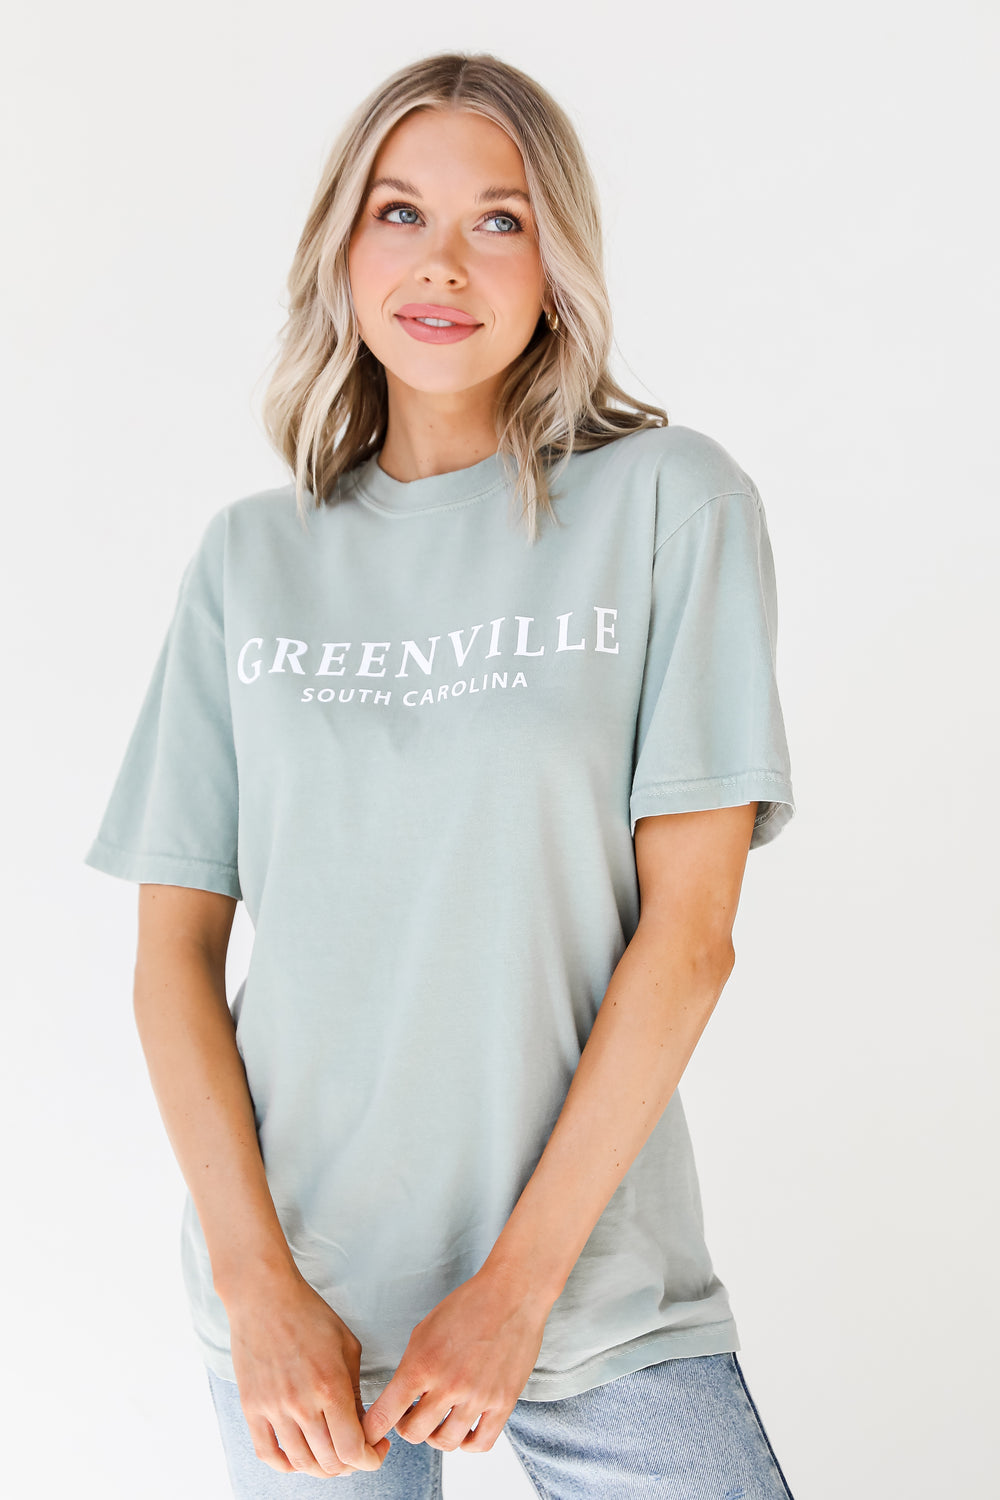 Sage Greenville South Carolina Tee on model